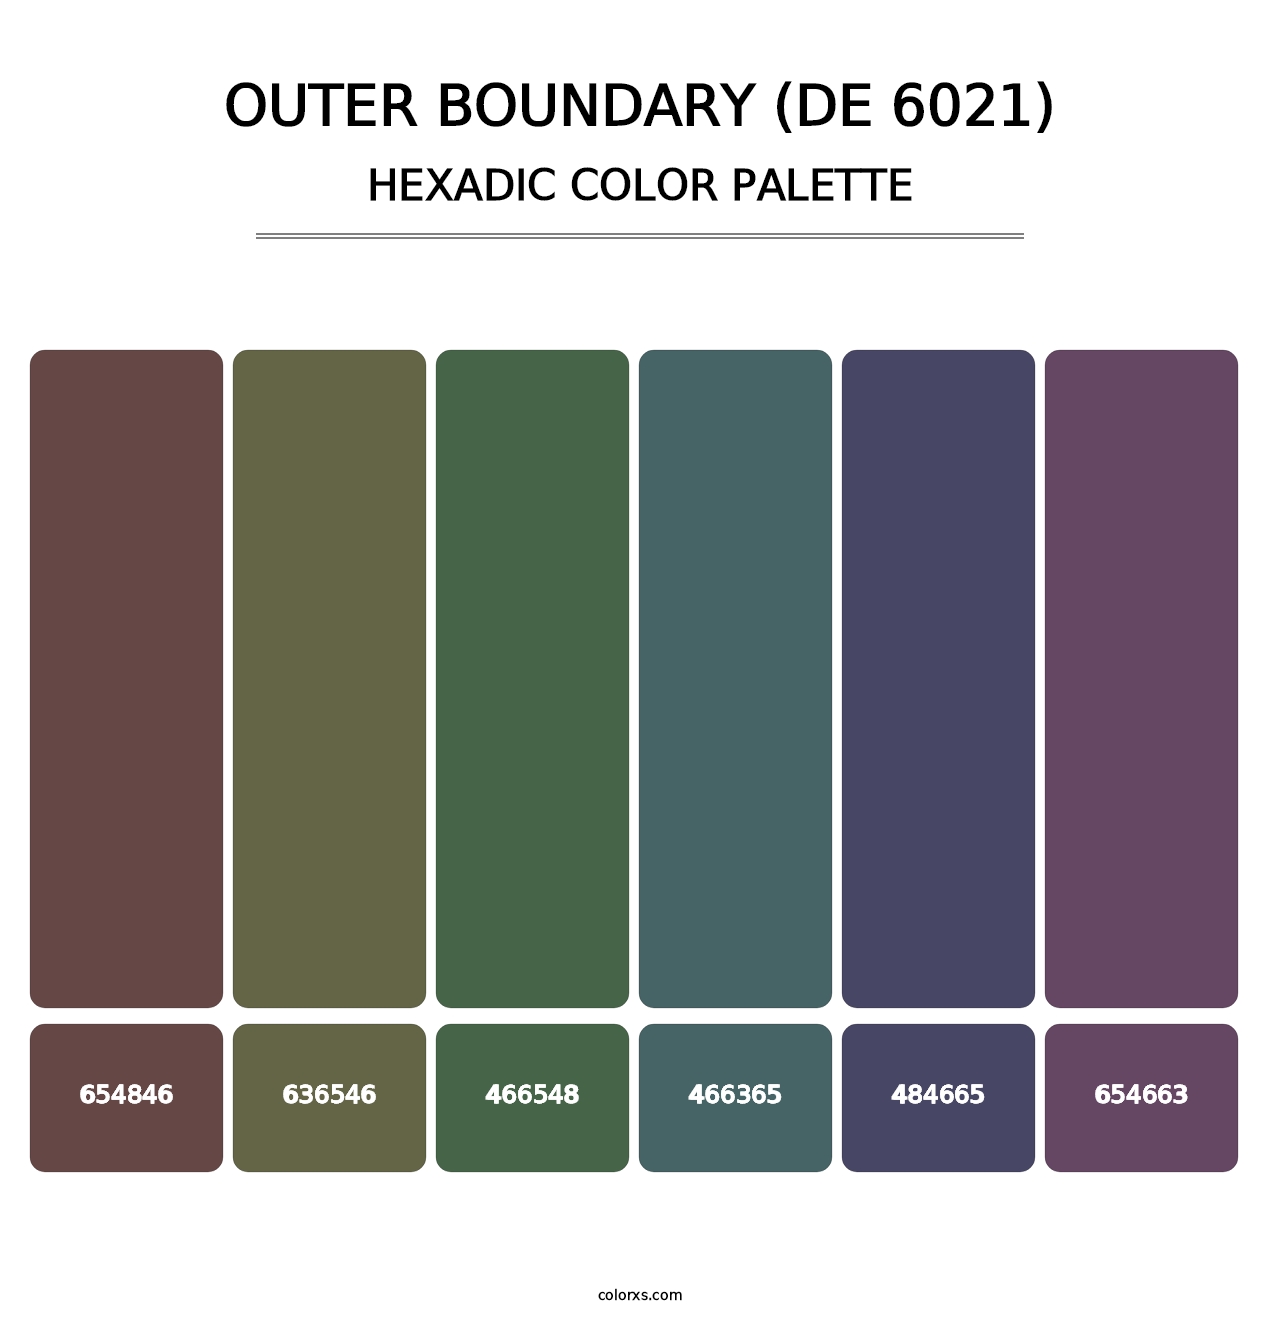 Outer Boundary (DE 6021) - Hexadic Color Palette